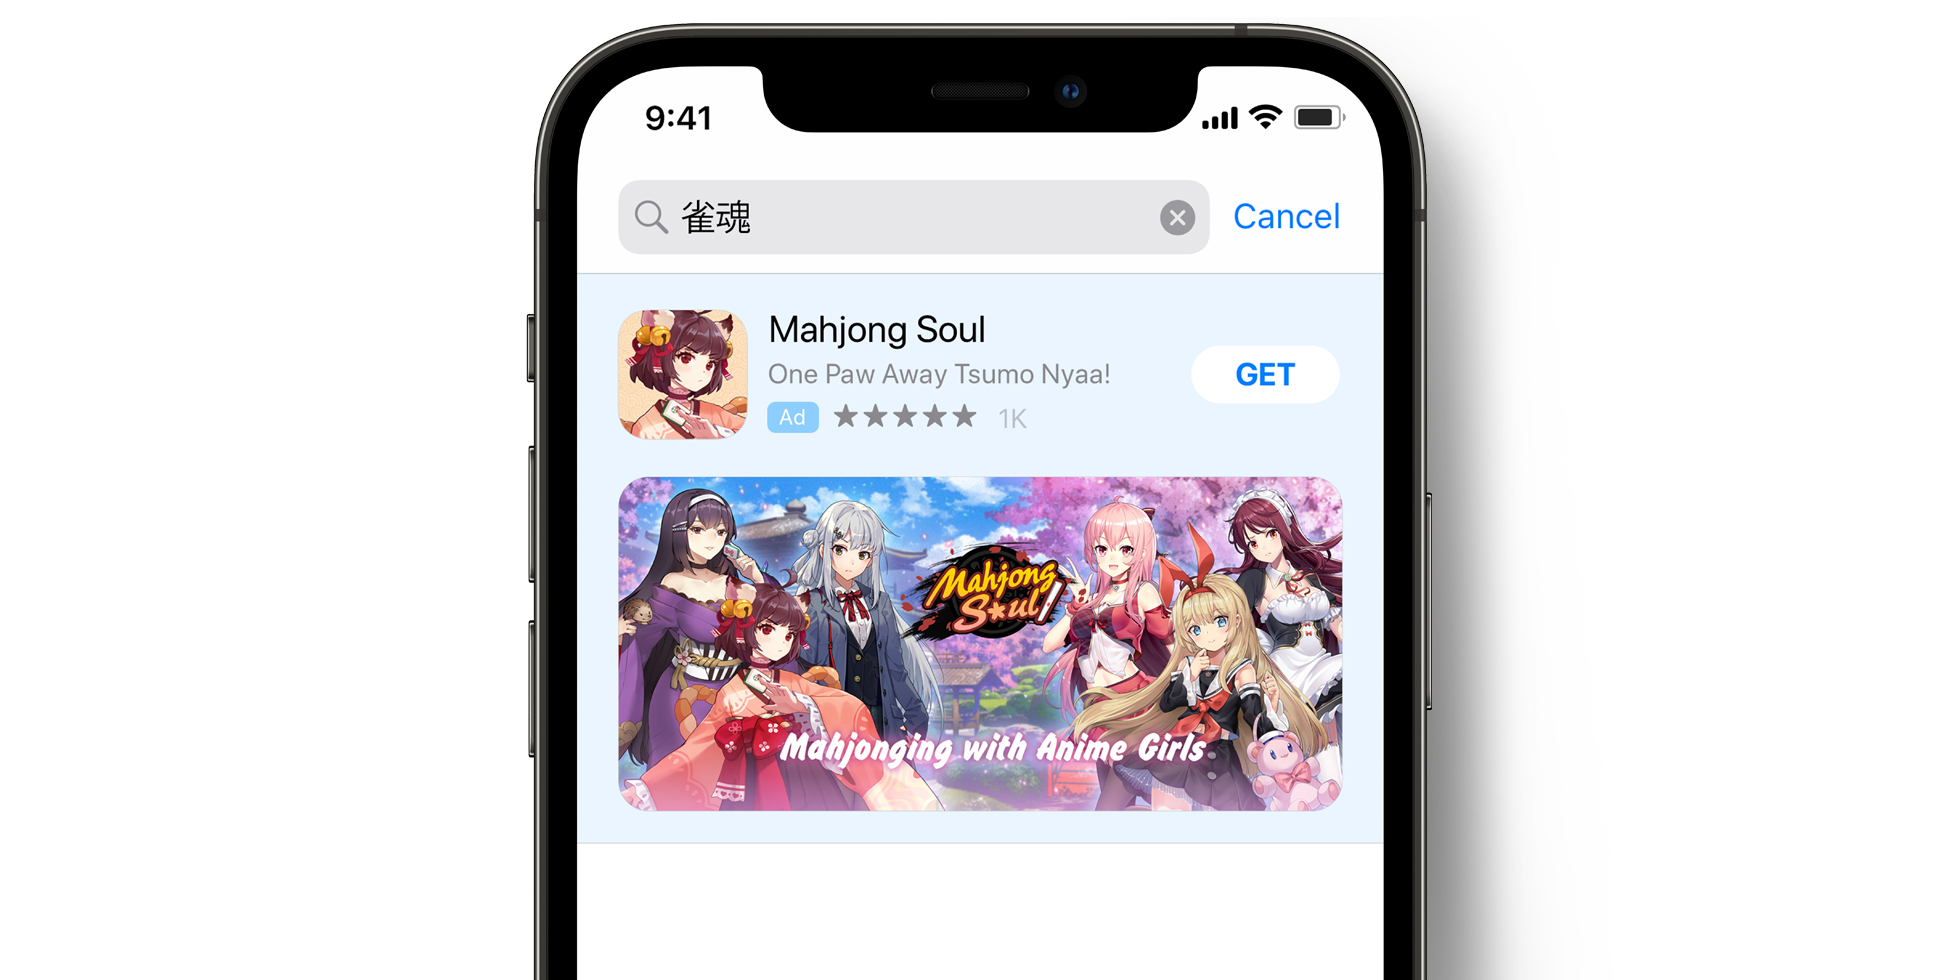 App Store 上的 Mahjong Soul 广告